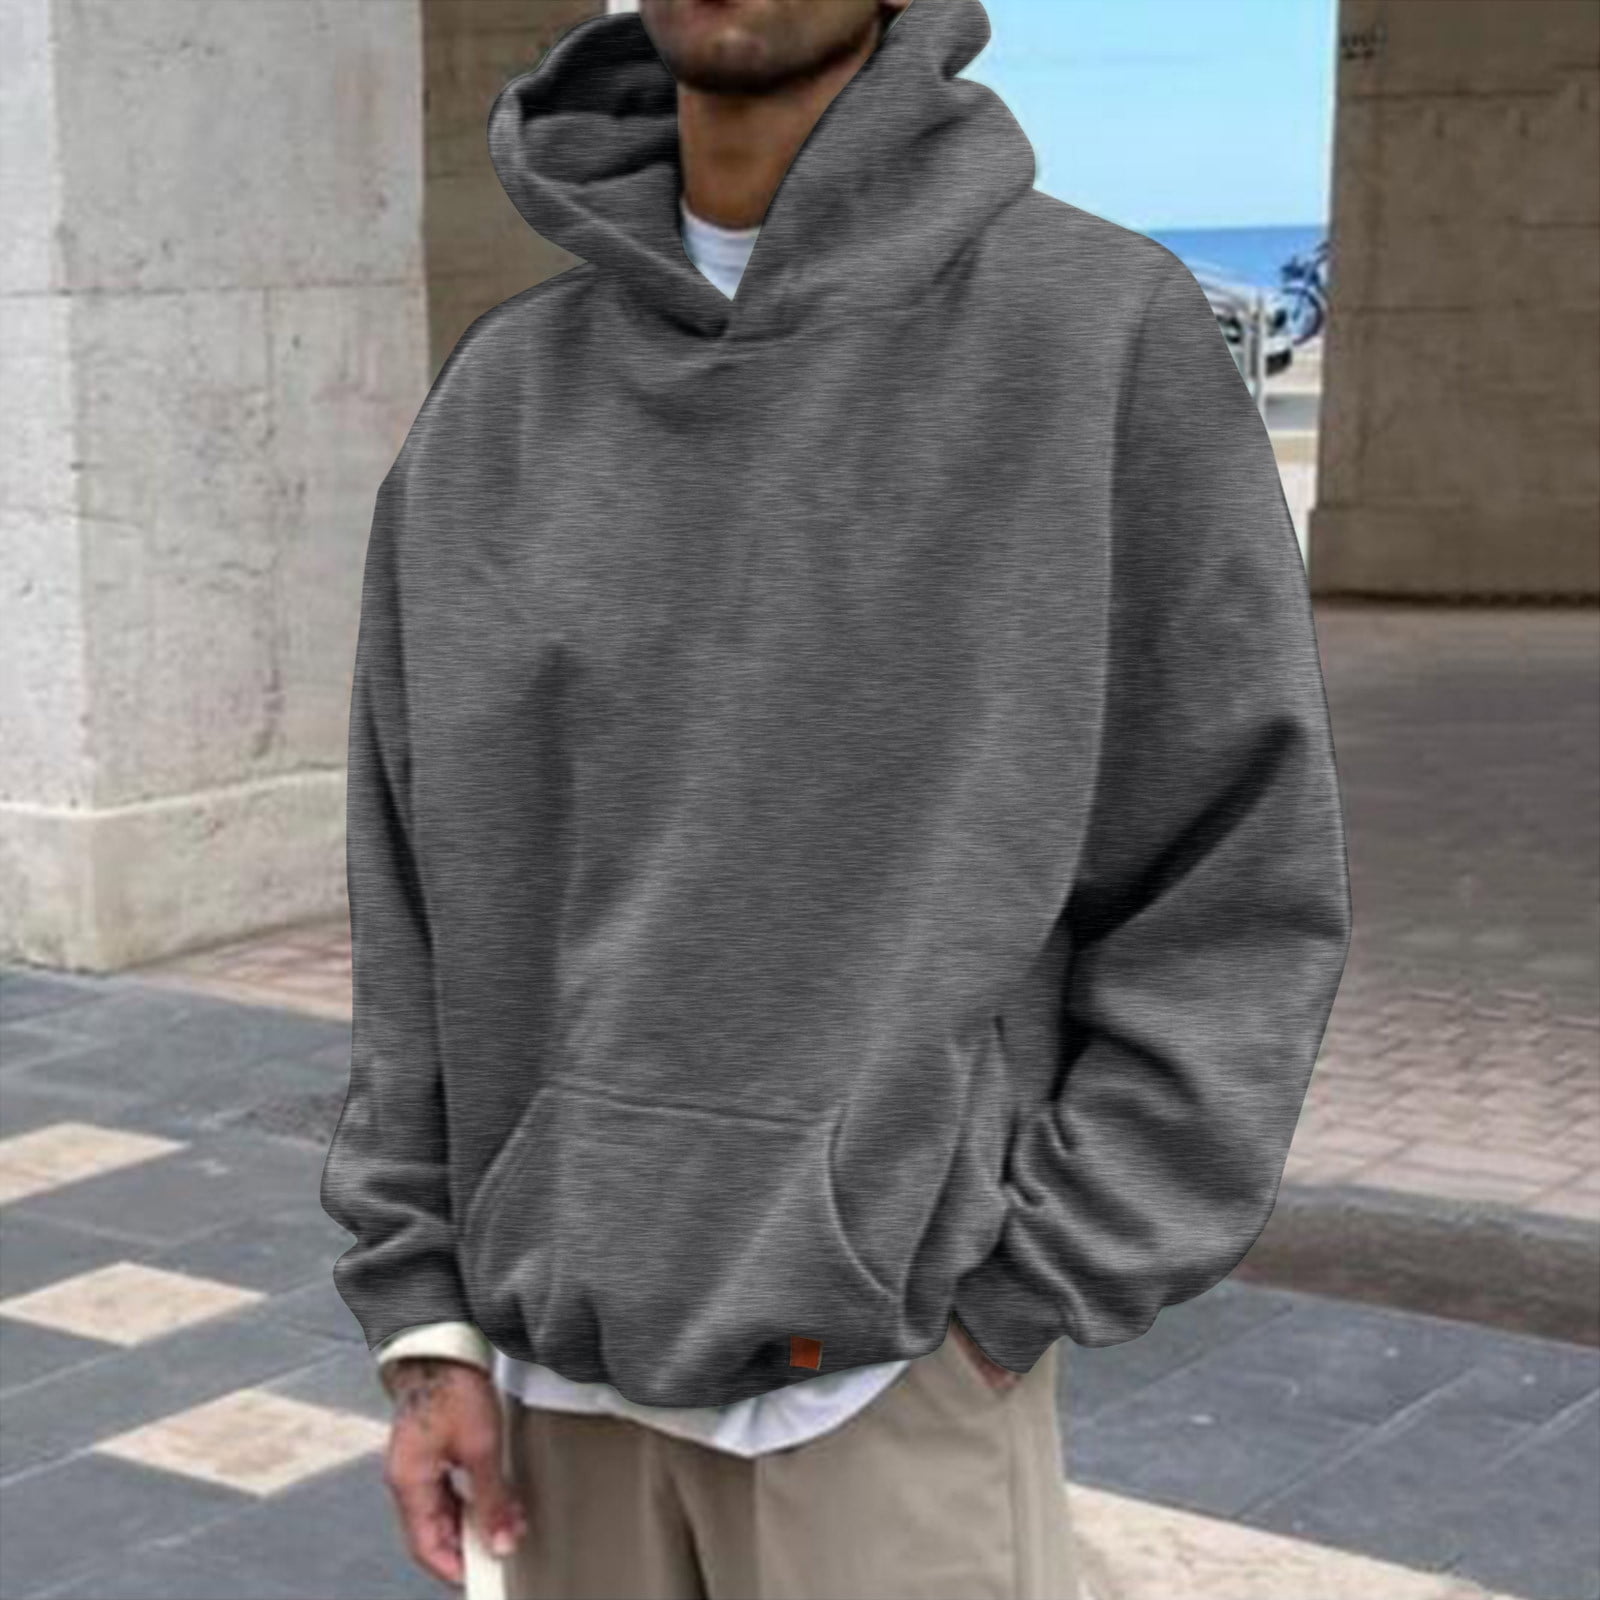 Aayomet Hoodies For Men Fashion Men's Solid Pullover Hoodies Sports Soft  Blend Hooded Sweatshirts with Kanga Pocket,Dark Gray XL 